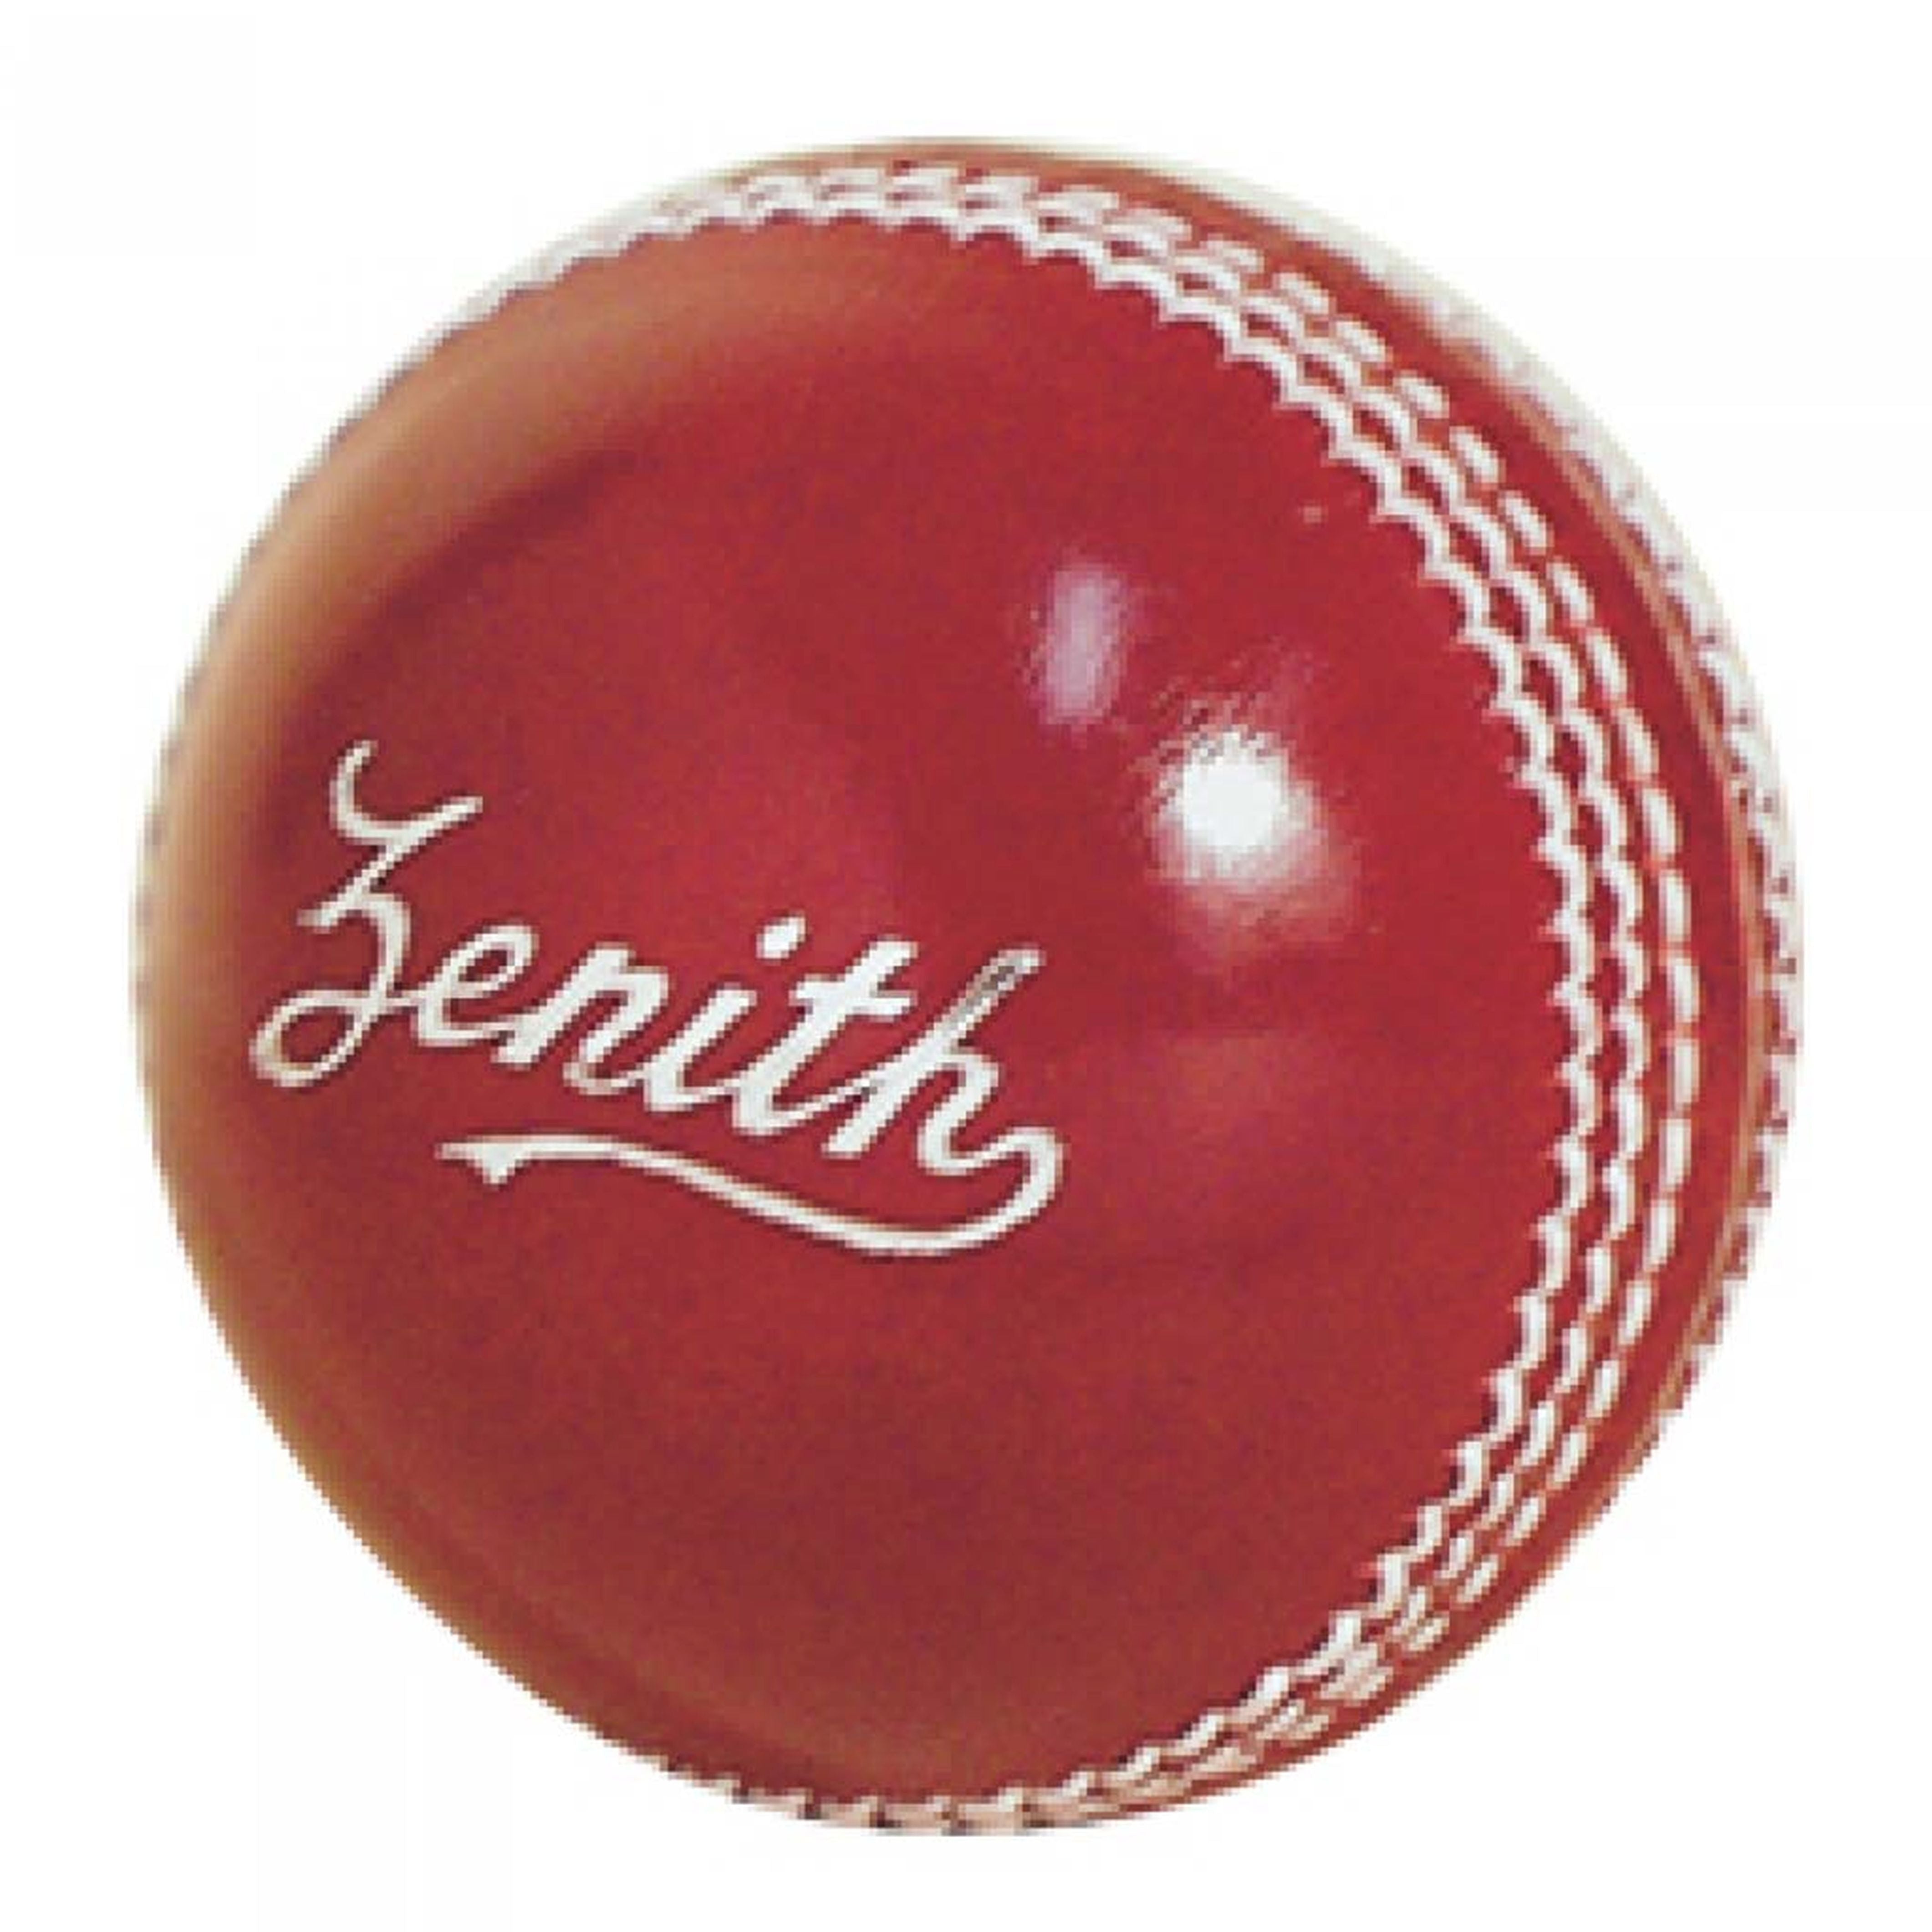 Kookaburra Zenith Cricket Ball - Dozen Price - The Cricket Warehouse